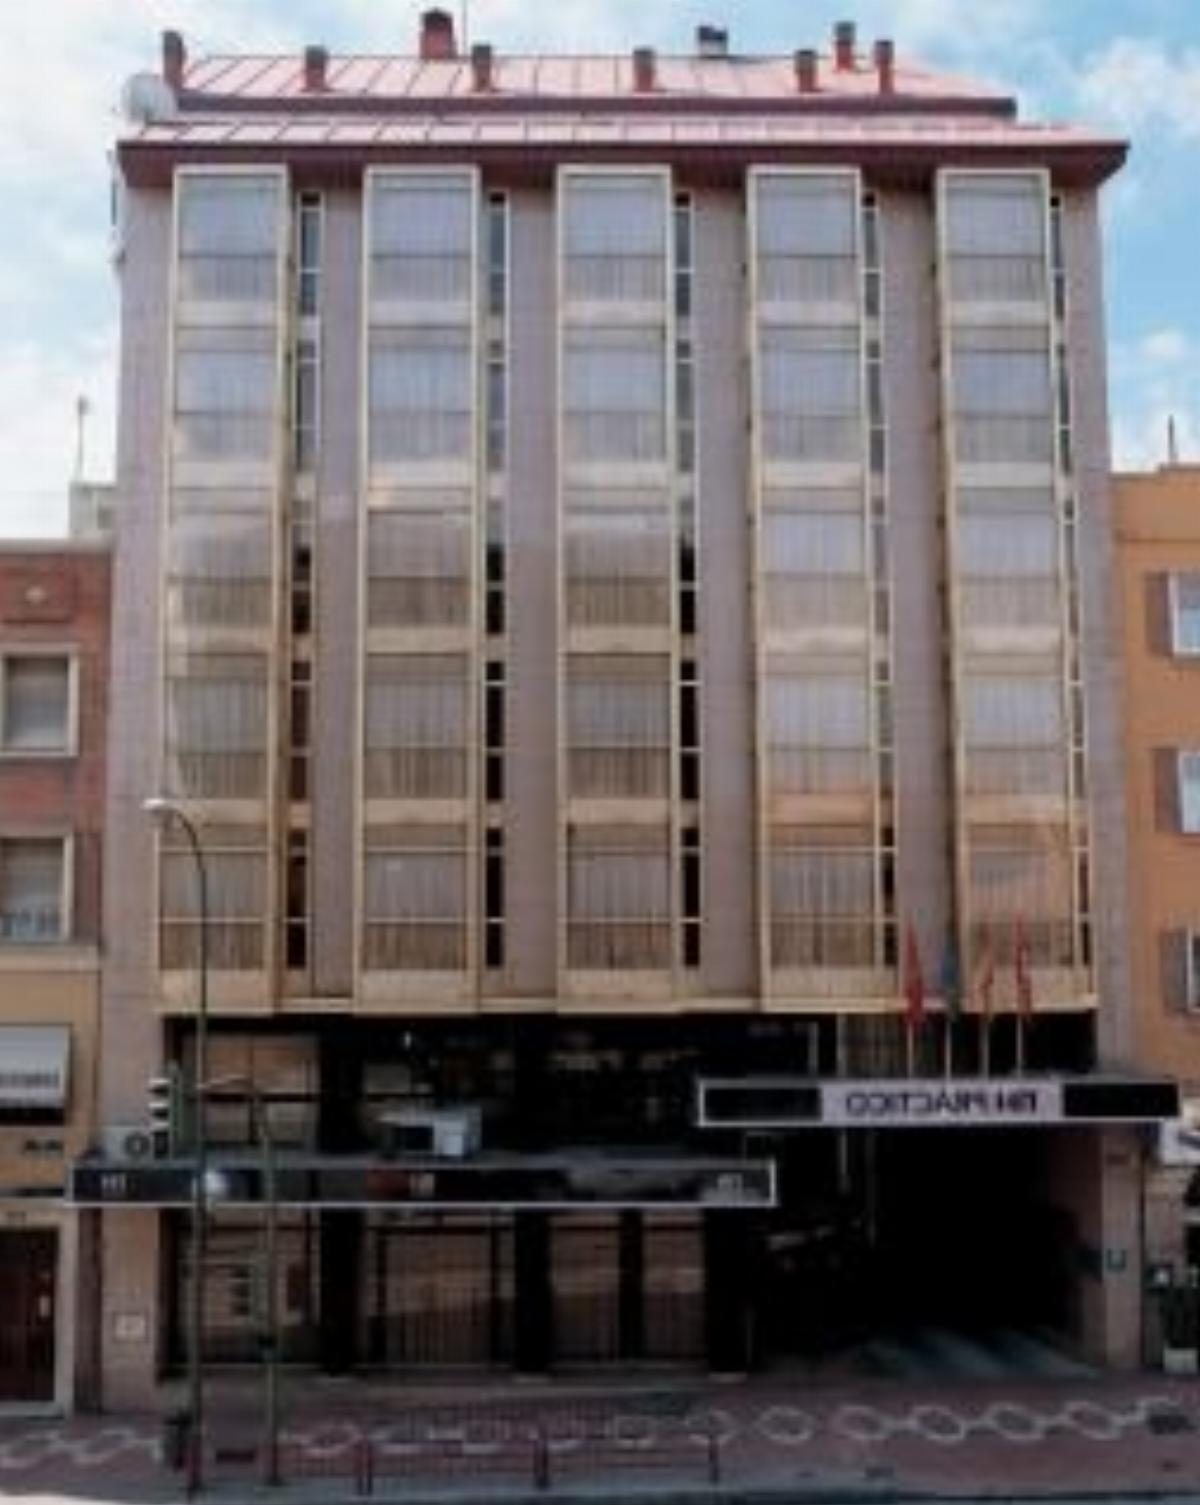 Erase un Hotel Hotel Madrid Spain